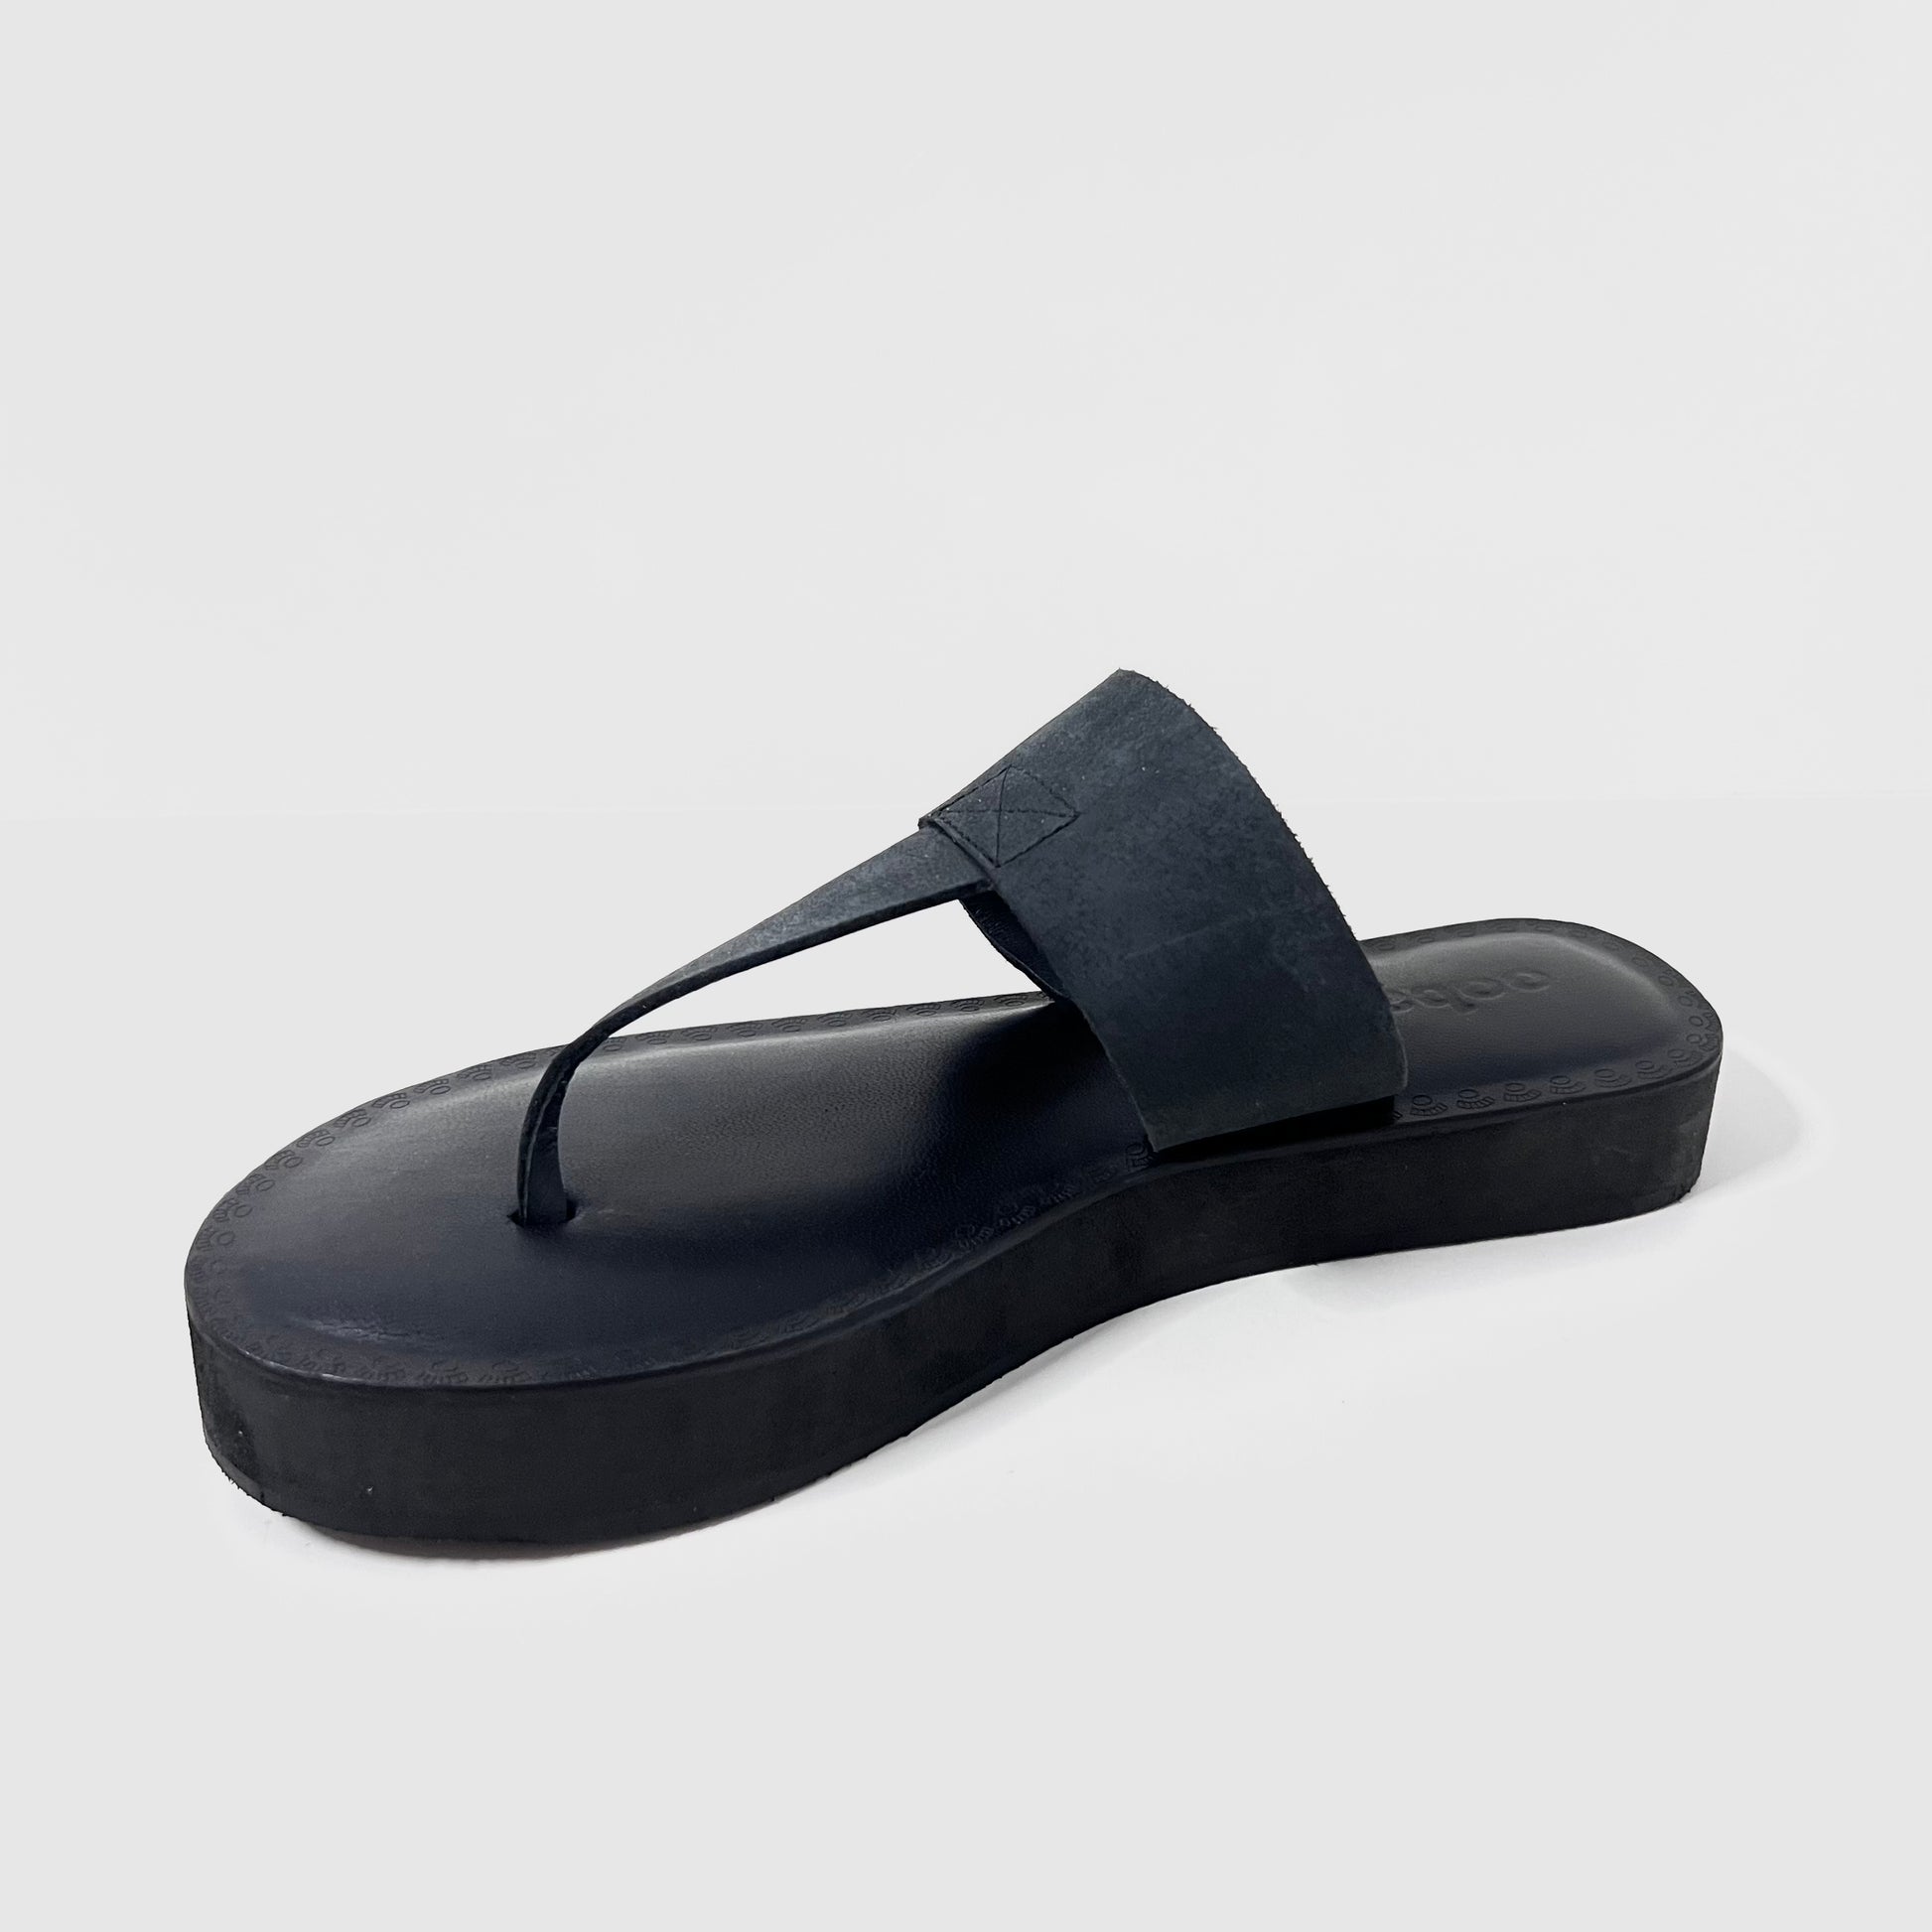 oobash Katherine Black leather thong sandal for ladies girl women